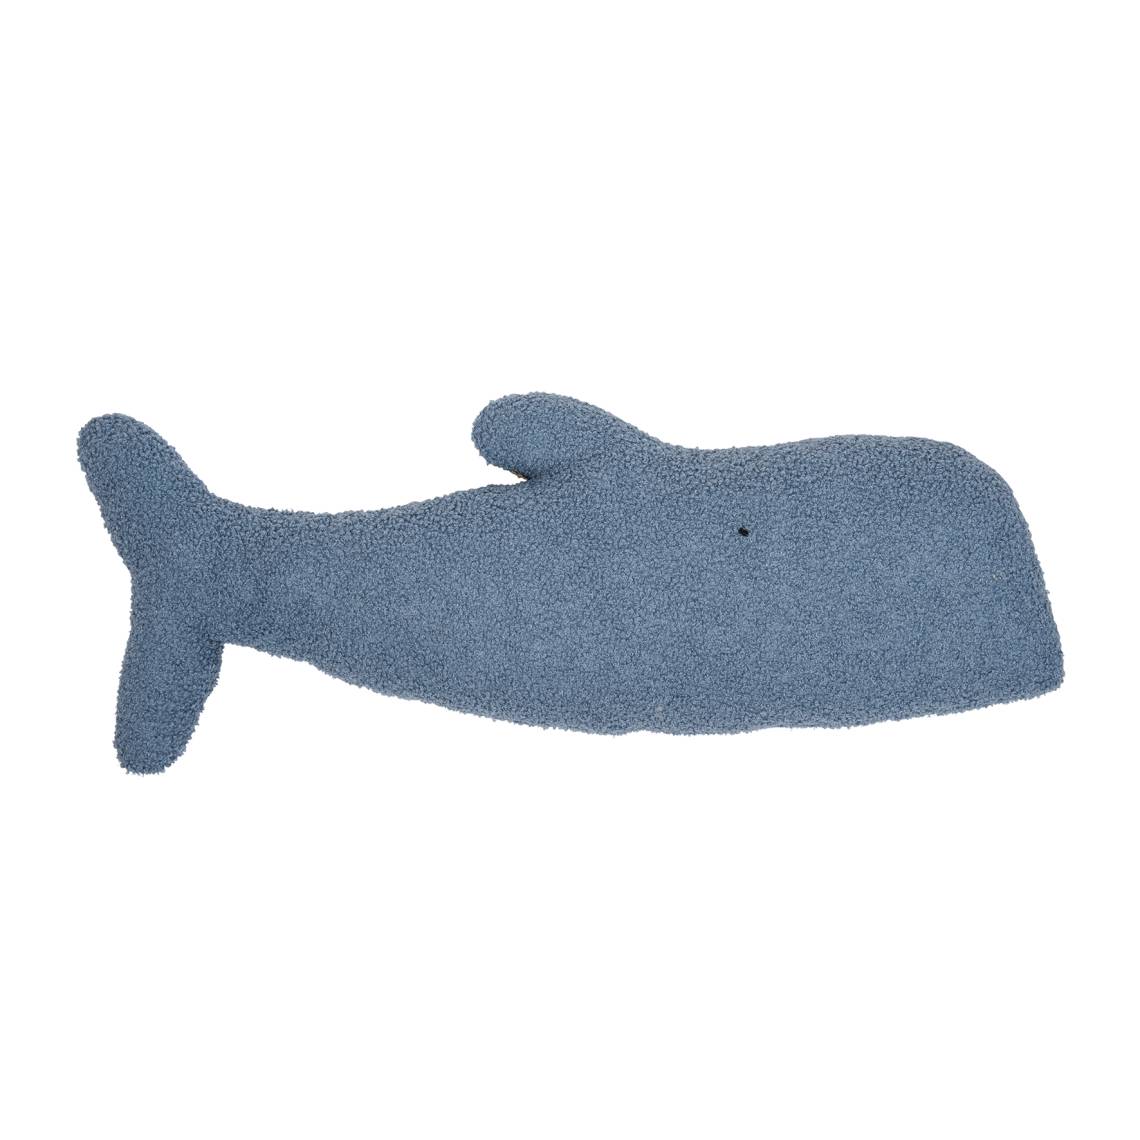 PAD Whale Spielzeug blue